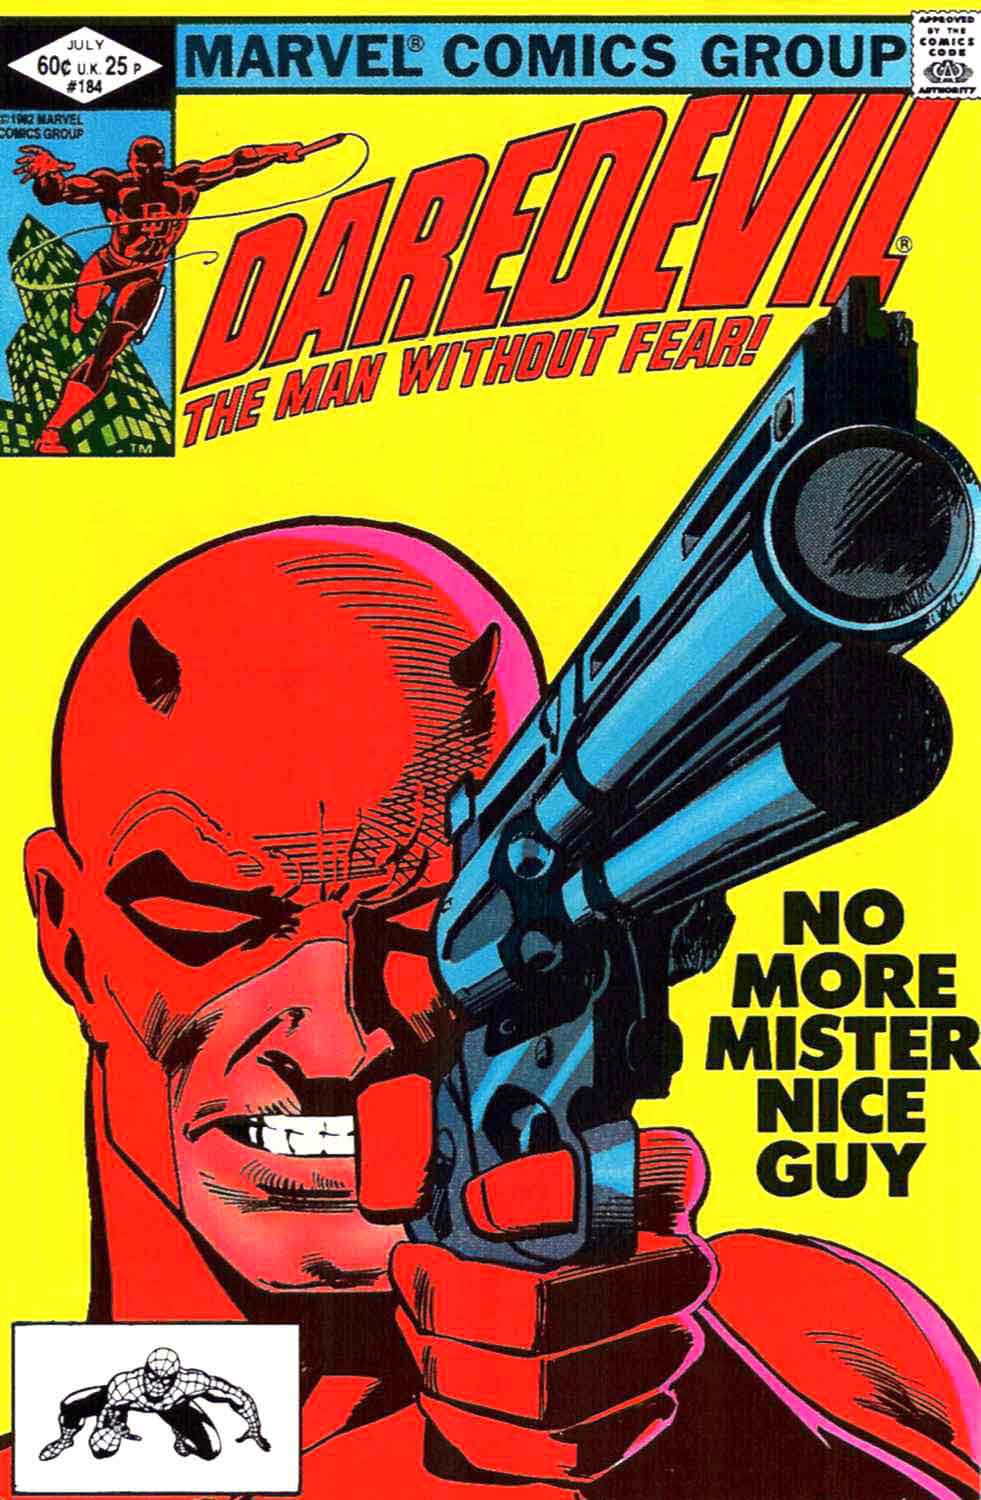 Daredevil v1 #184 marvel comic book cover art by Frank Miller